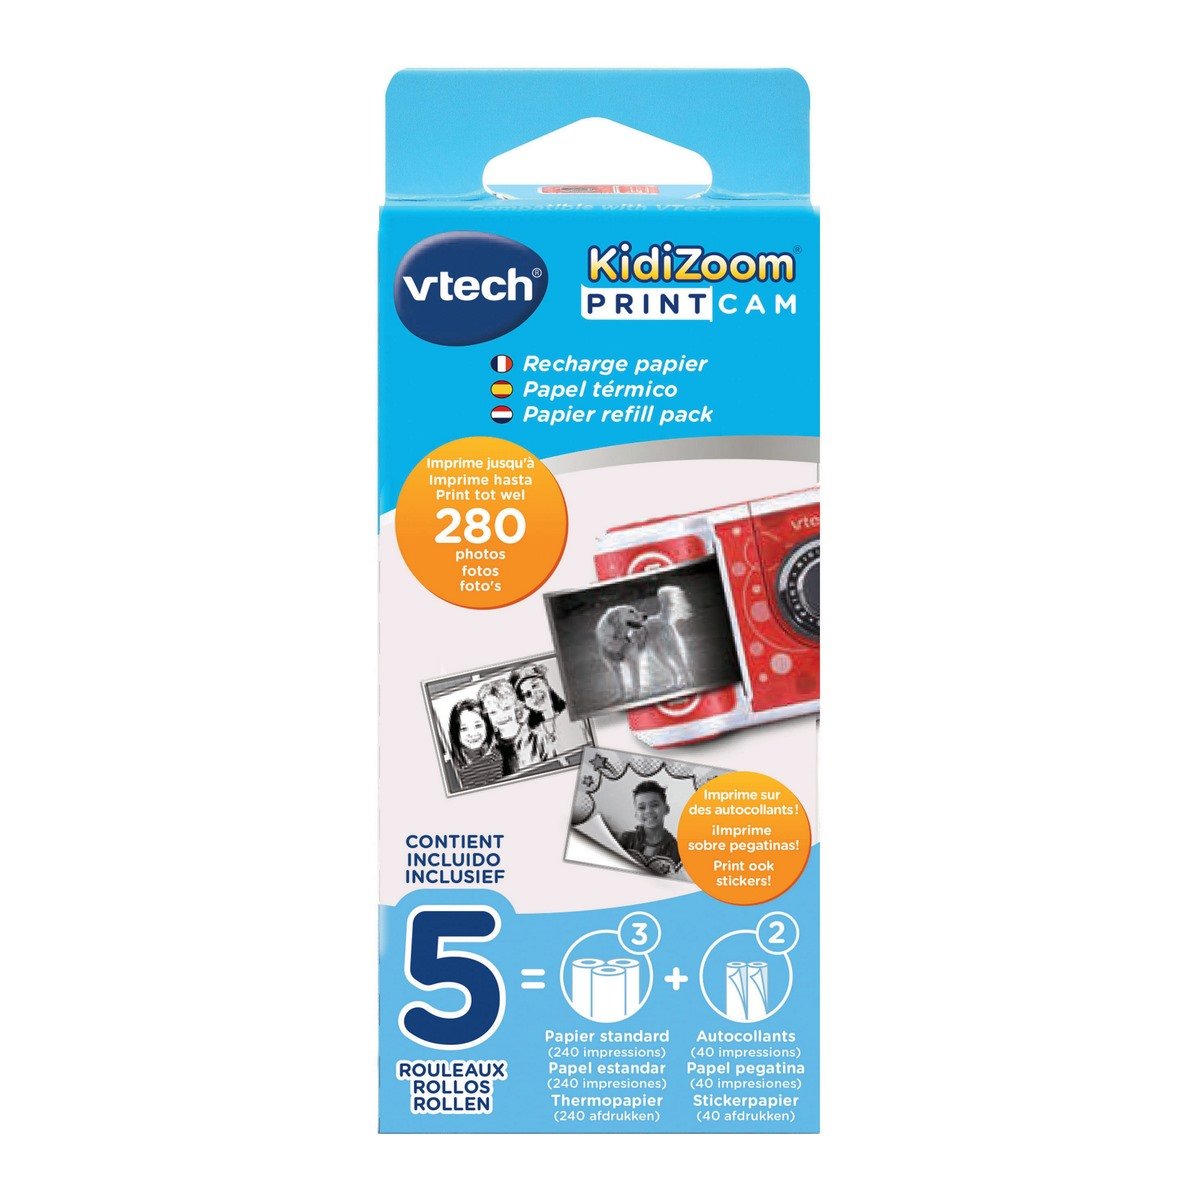 Appareil photo Vtech Kidizoom Print Cam - Appareil photo enfant